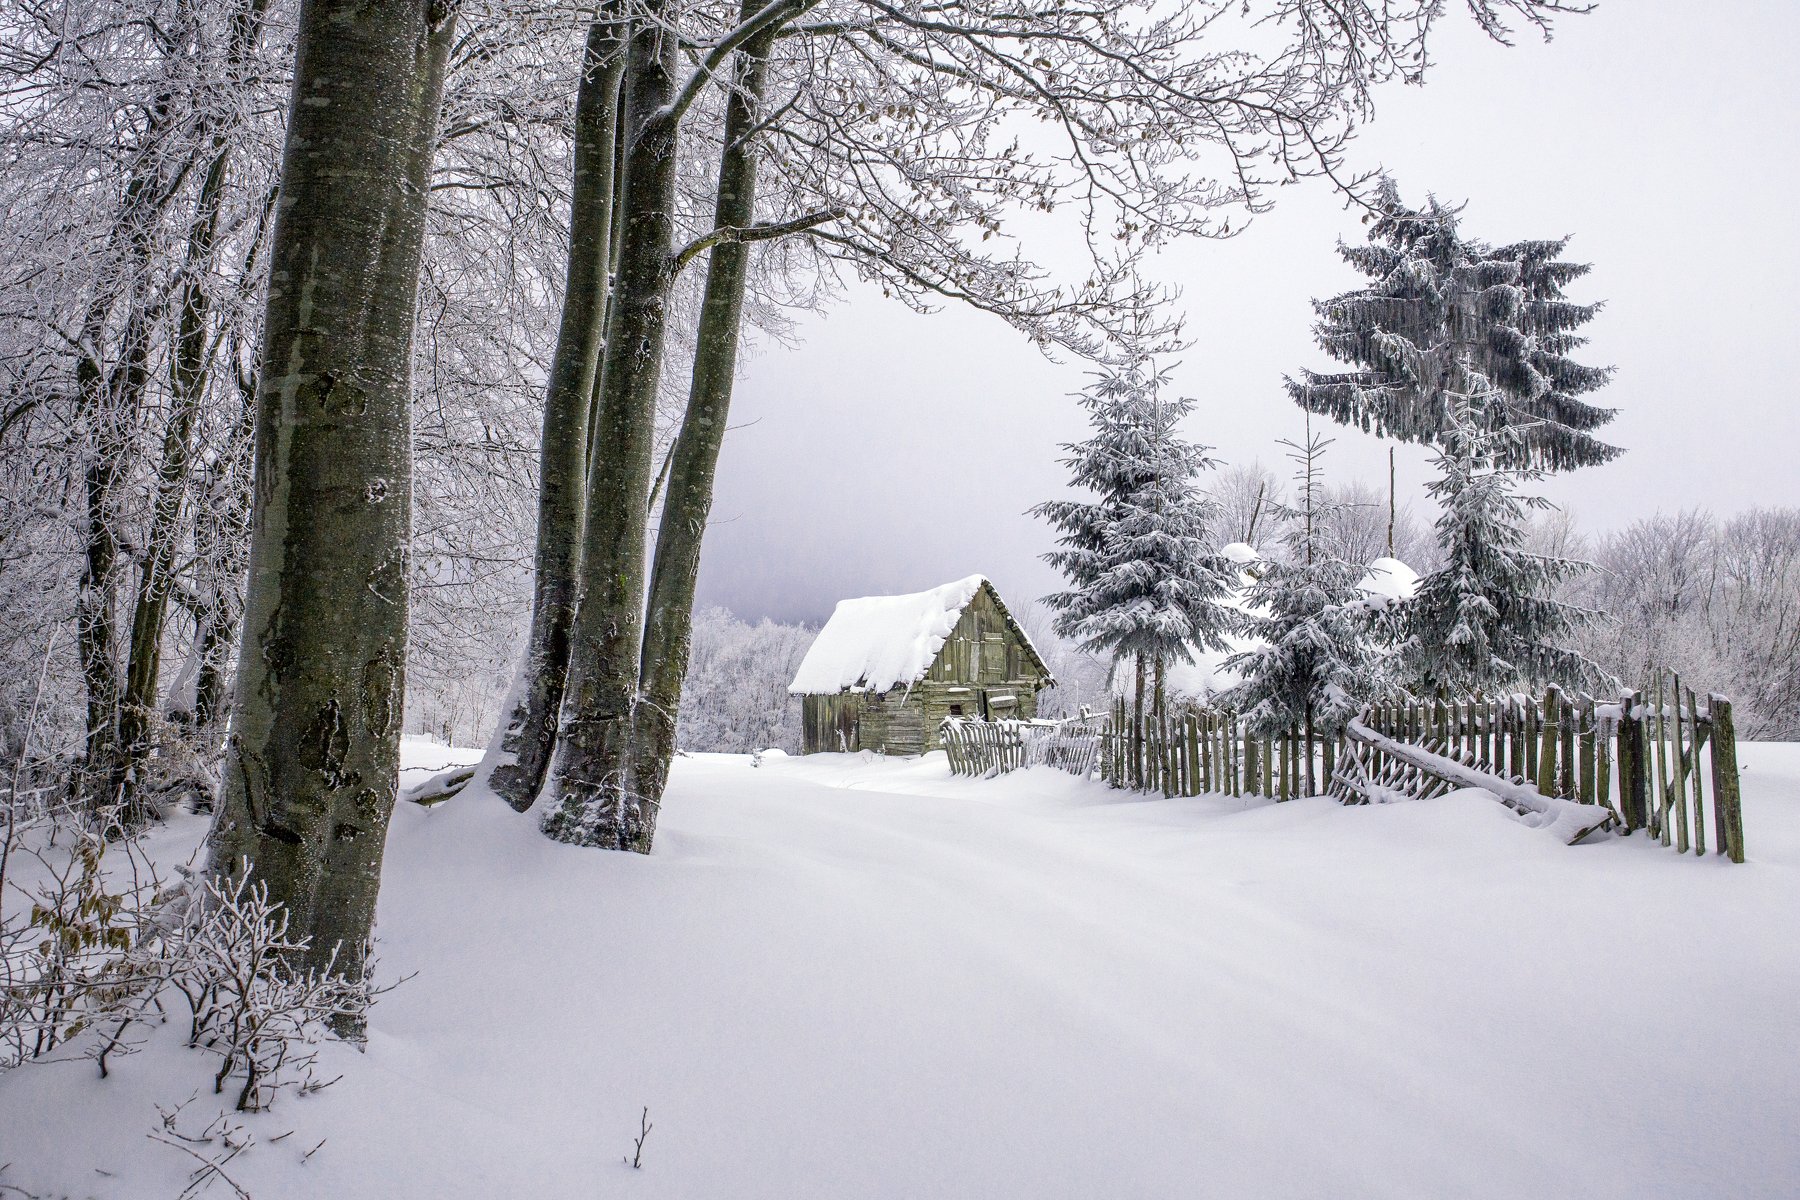 winter,snow,house,trees,frozen,fence,, Marius Turc